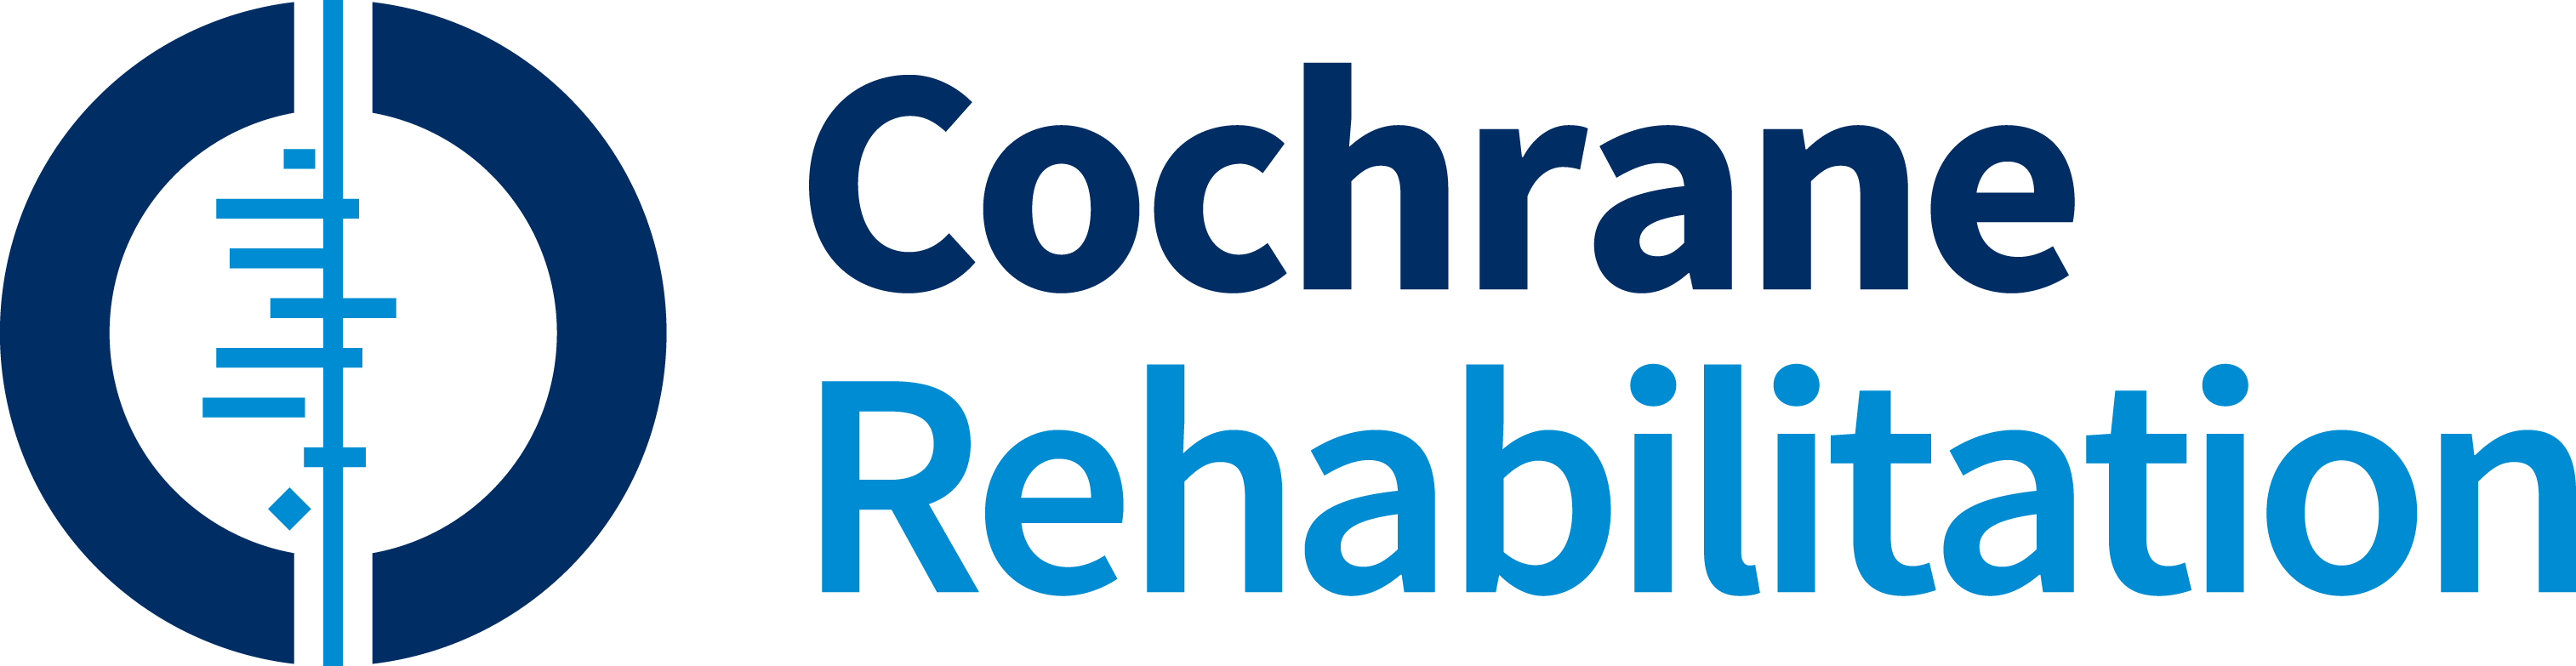 Link to Cochrane Rehabilitation website